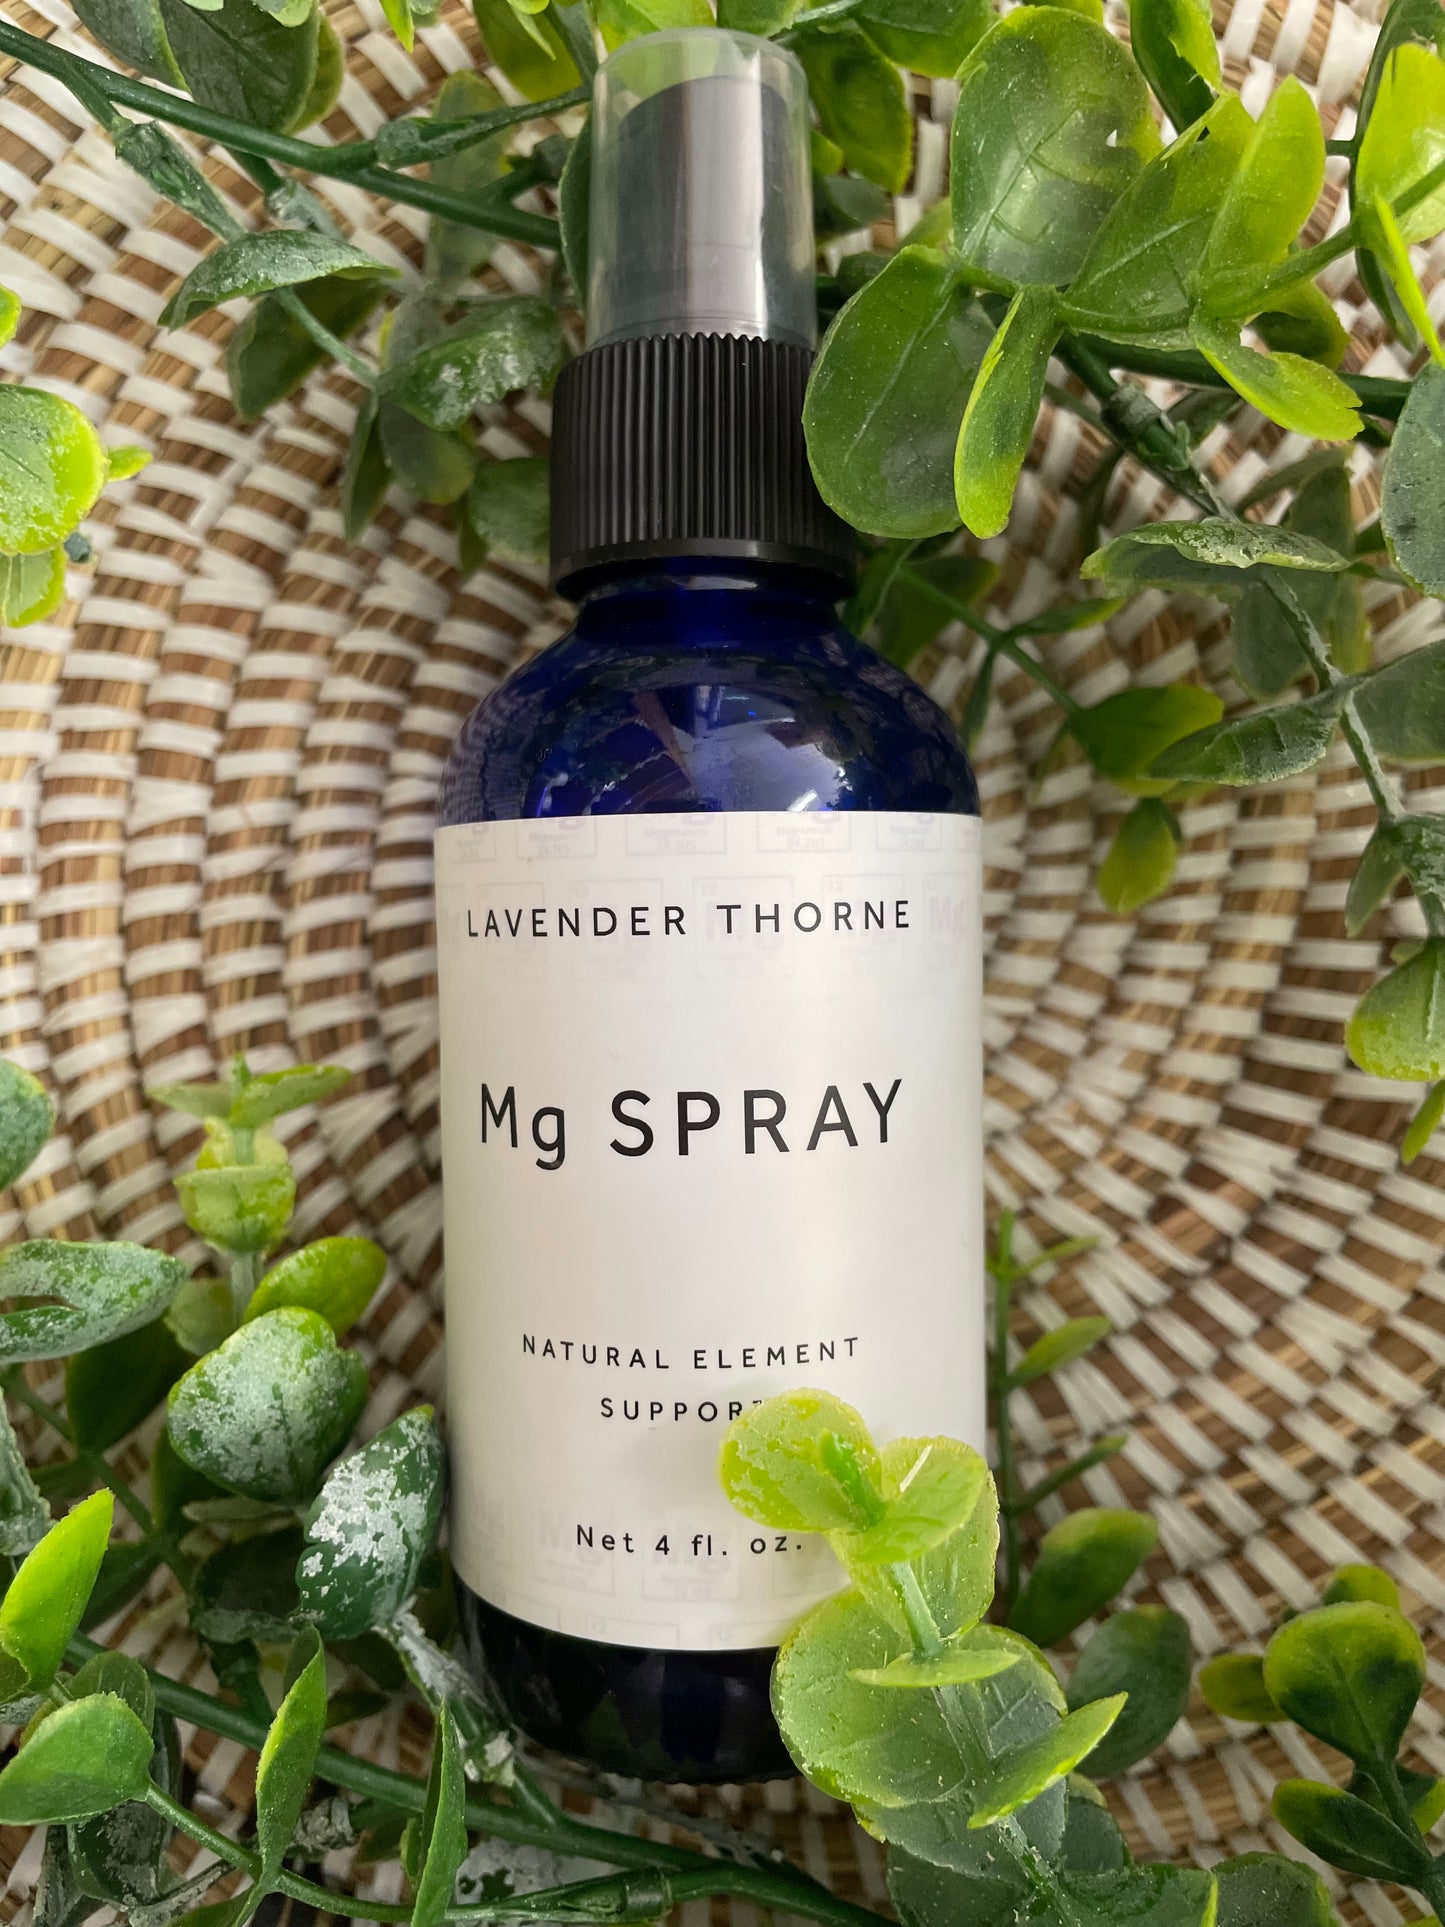 Lavender Thorne | Mg Spray